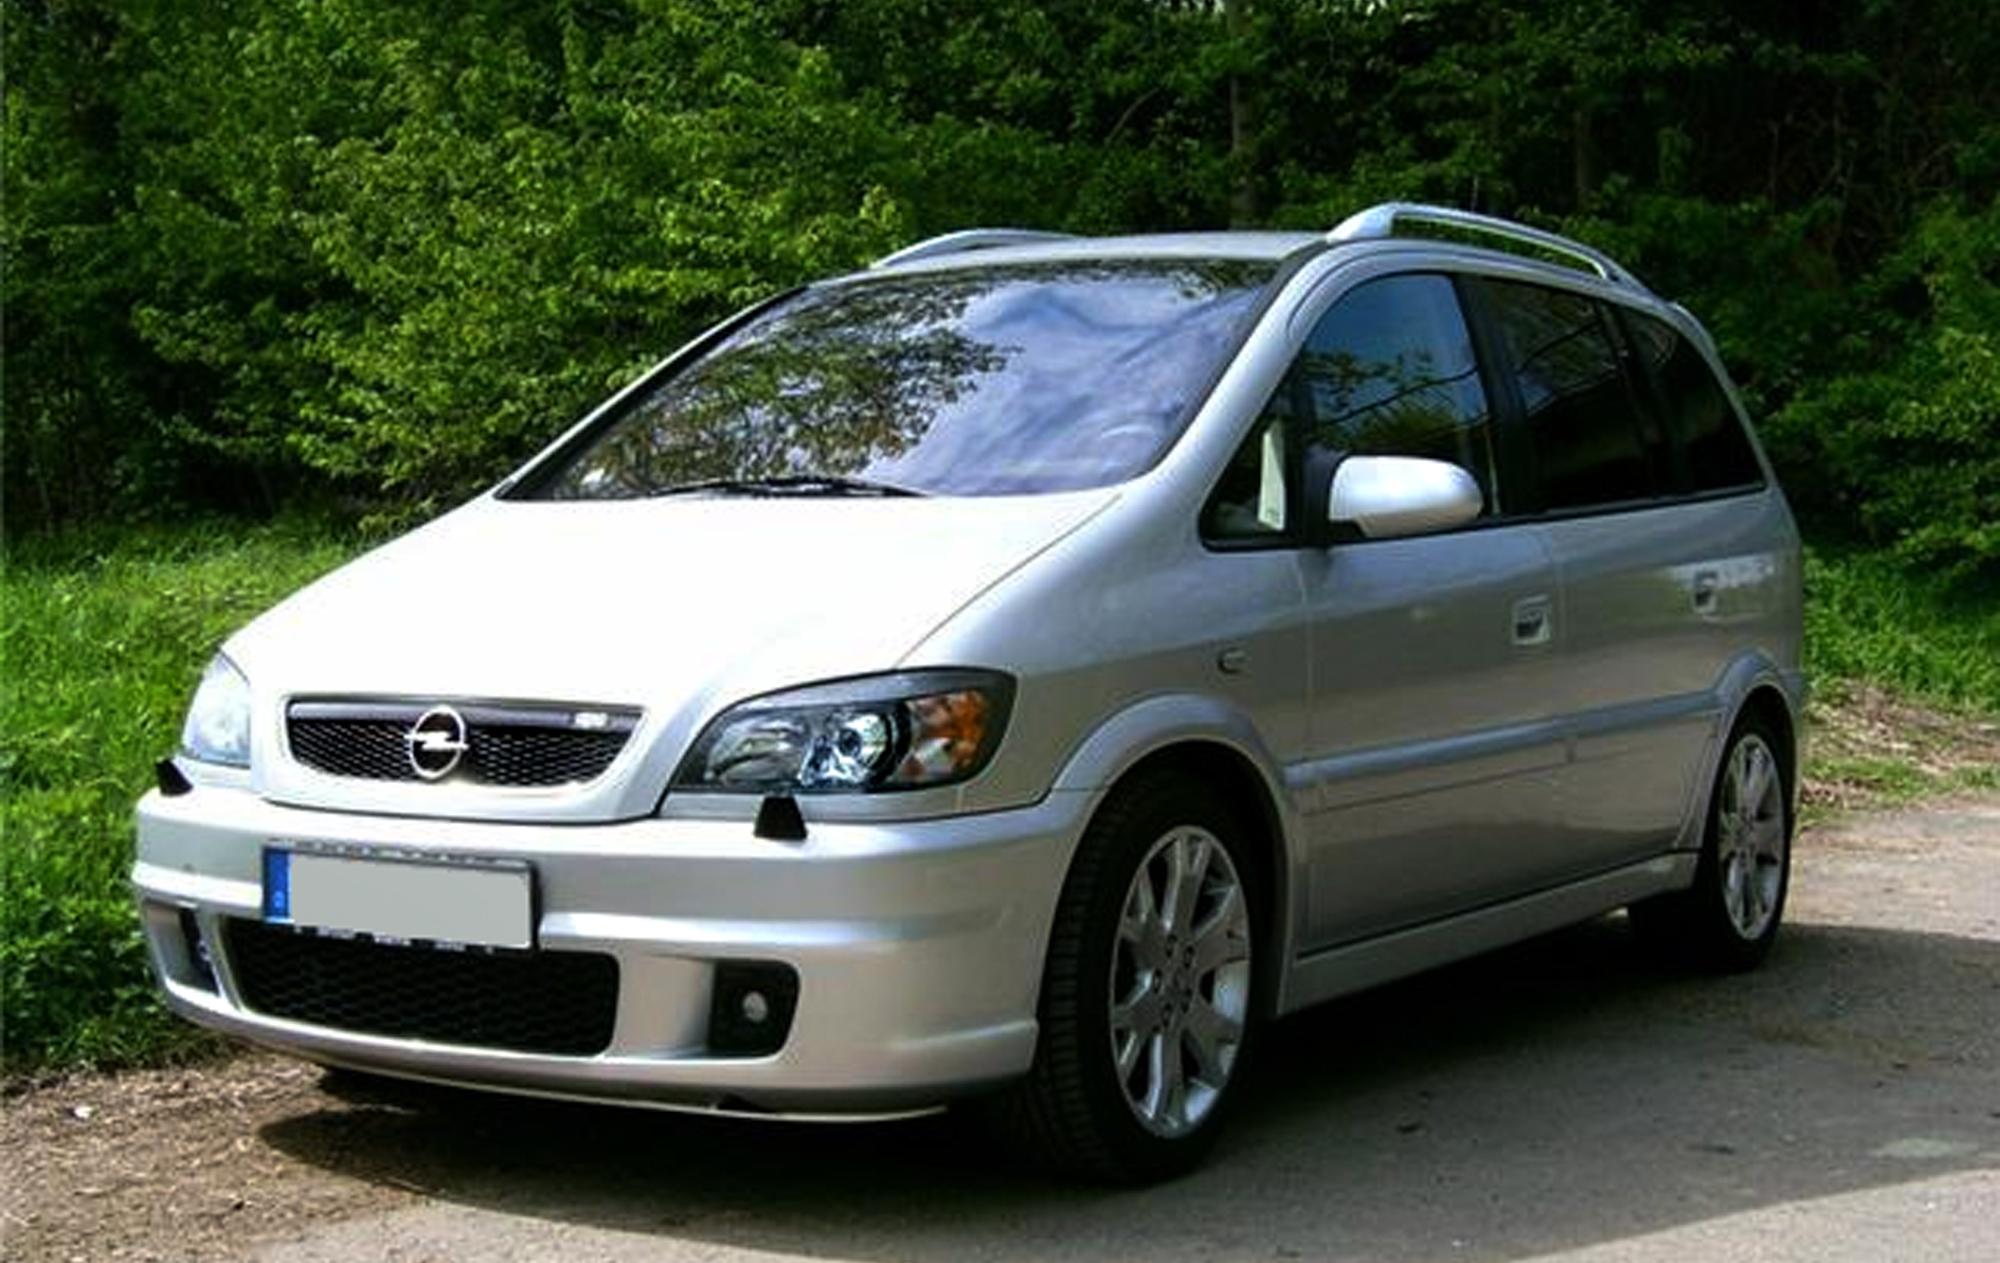 inch Beheren rol File:Opel zafira A opc.jpg - Wikimedia Commons